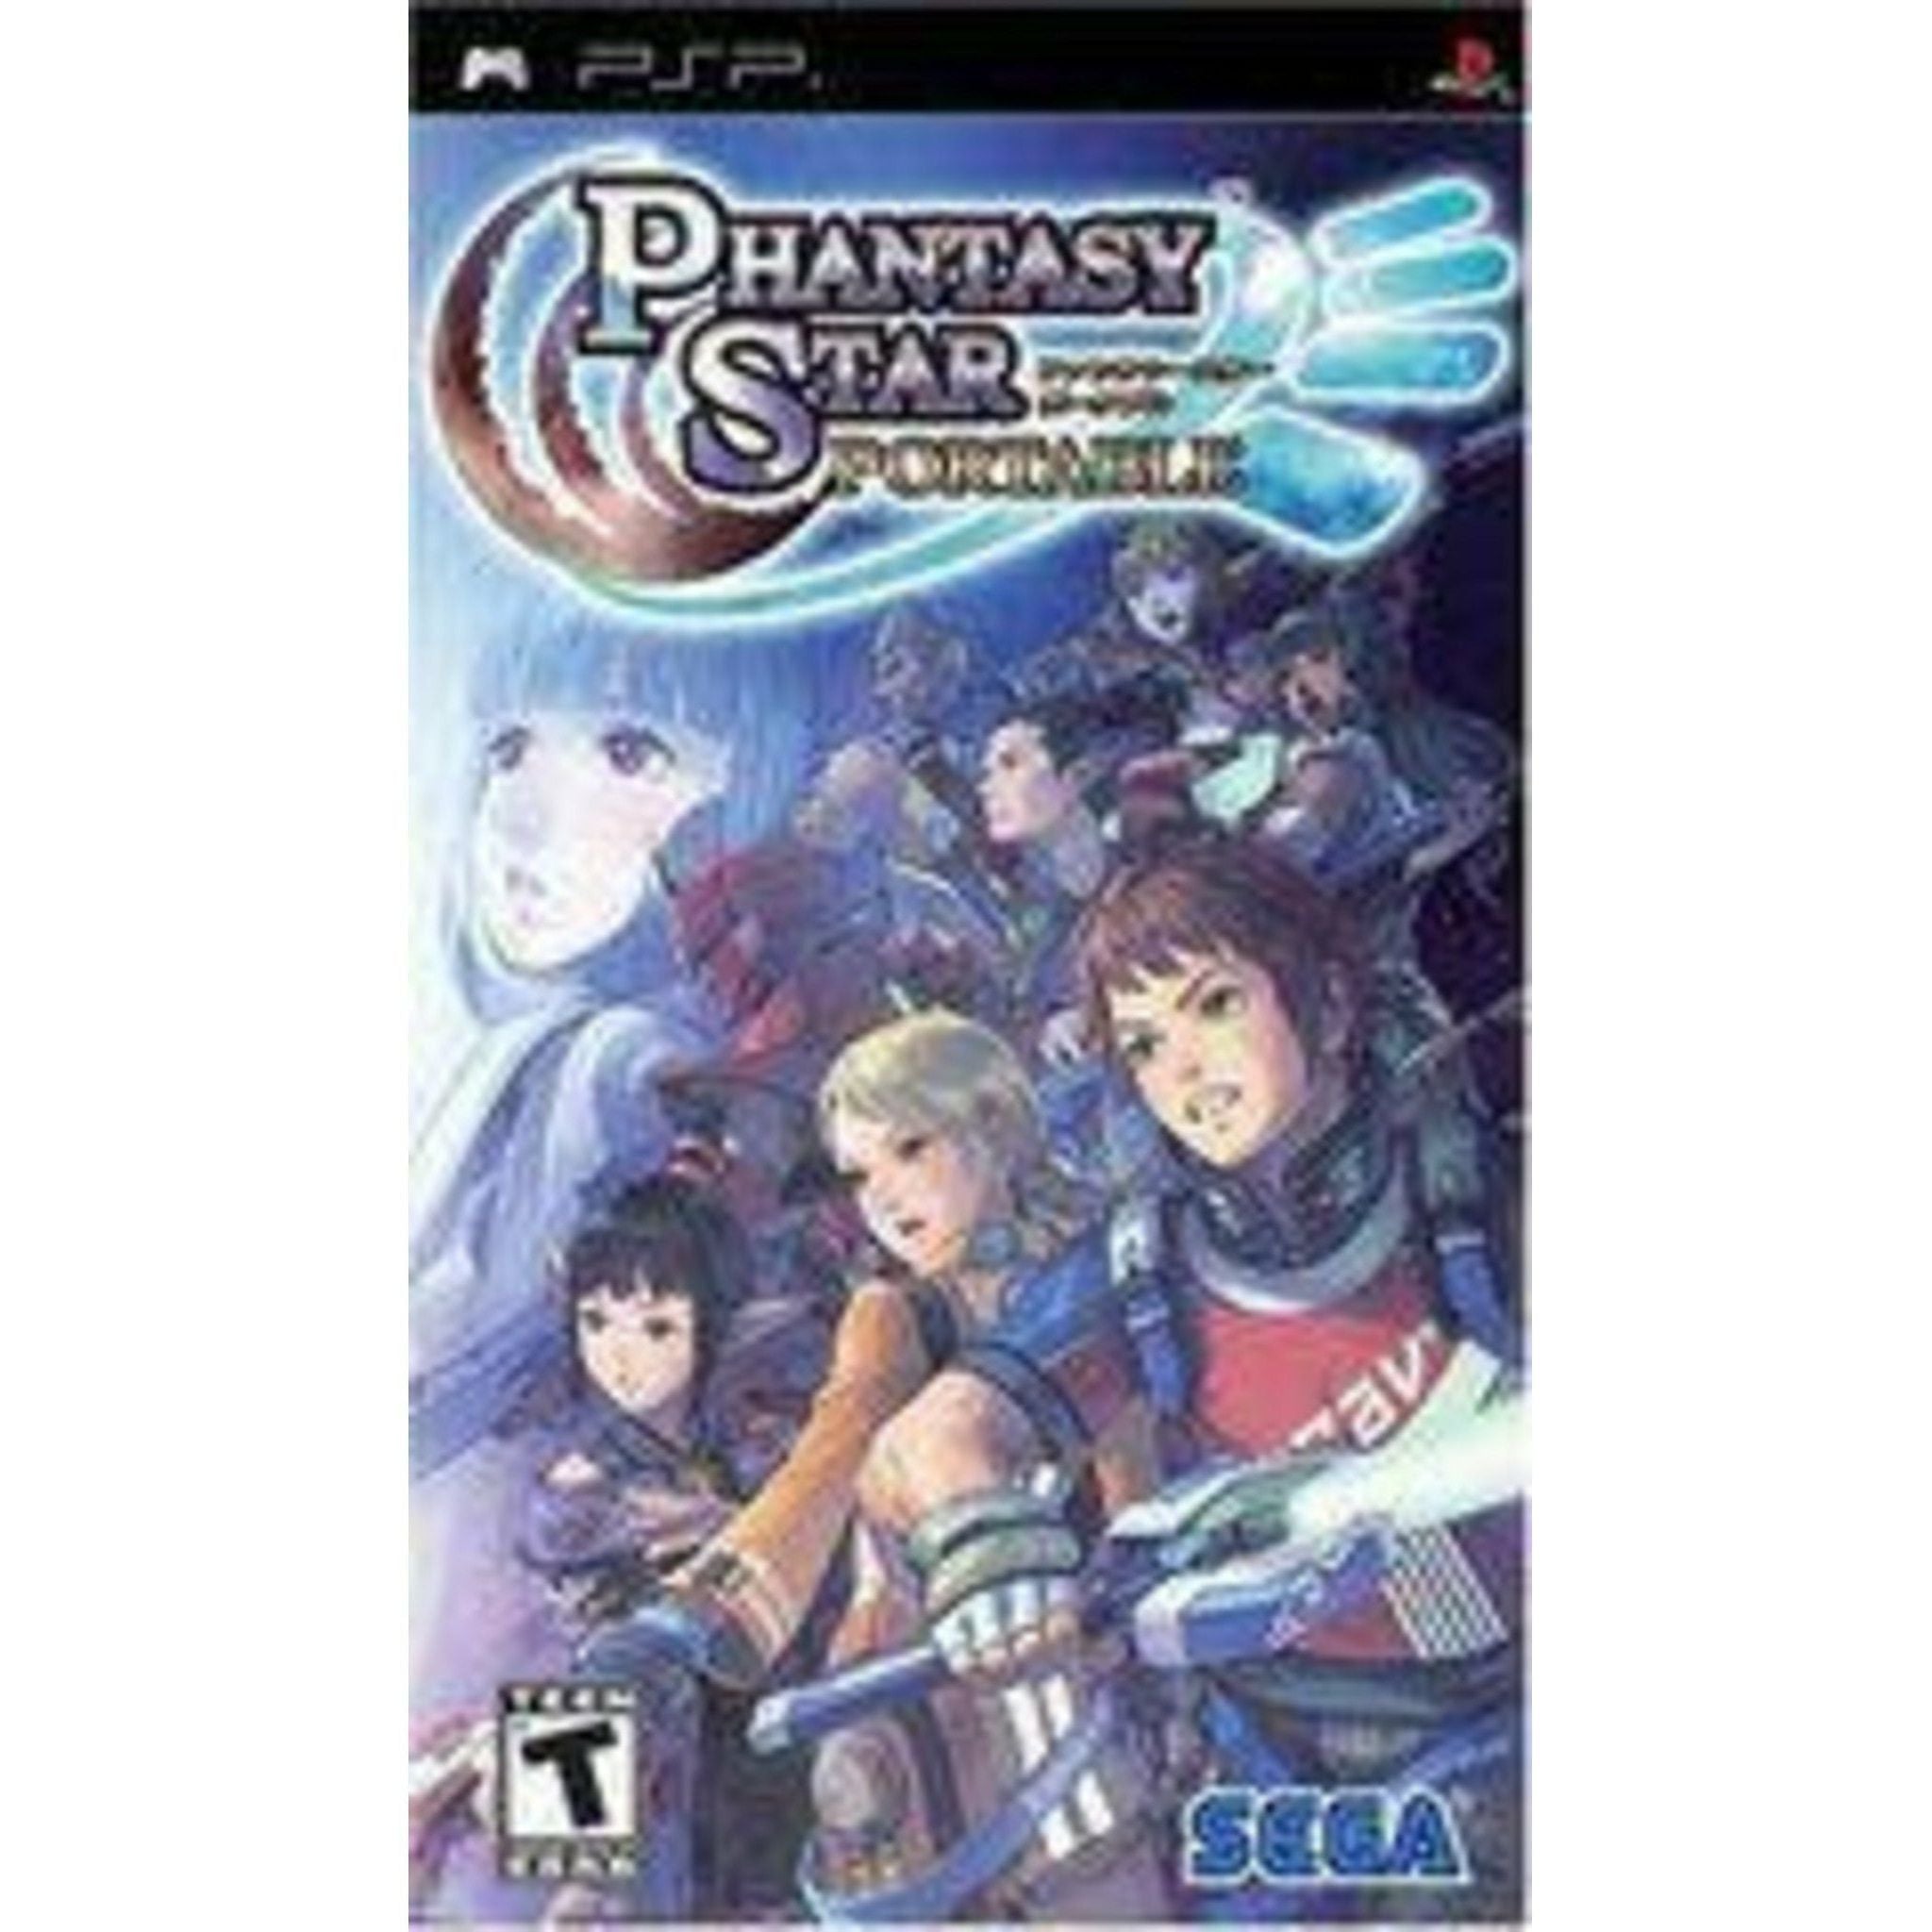 PSP - Phantasy Star Portable (In Case)